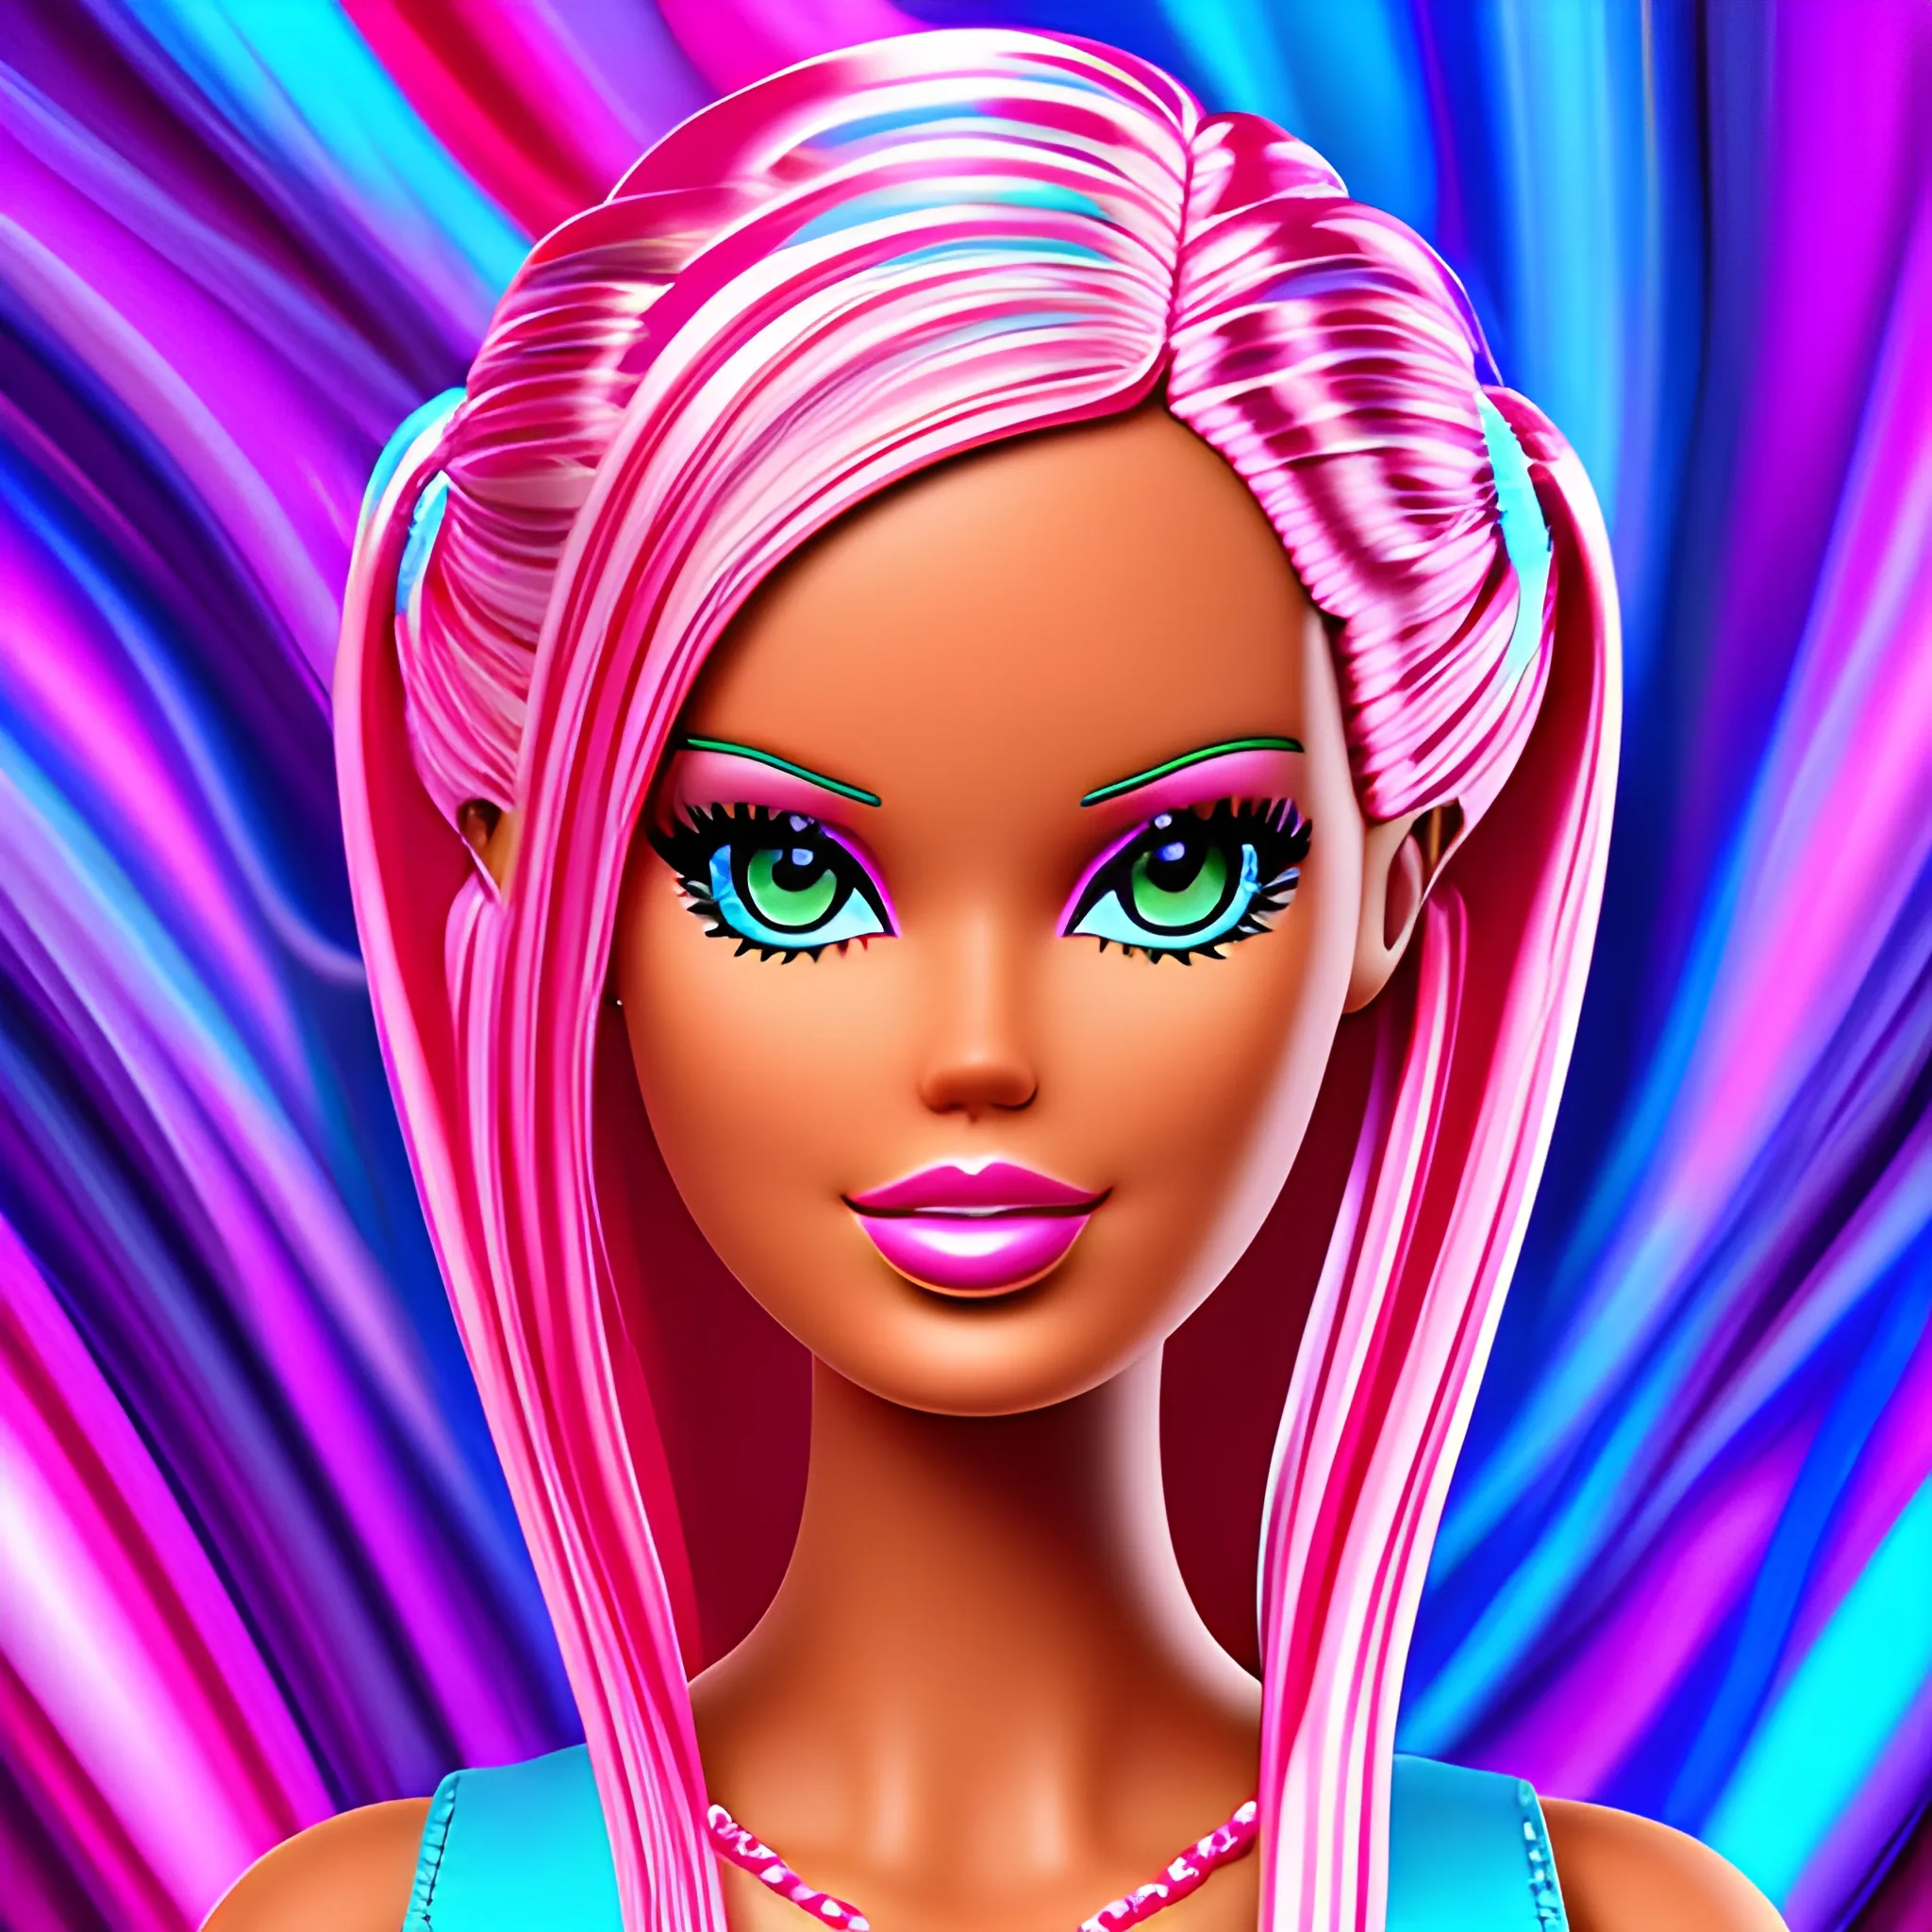 Barbie, smooth digital artwork, psychedelic digital art,

